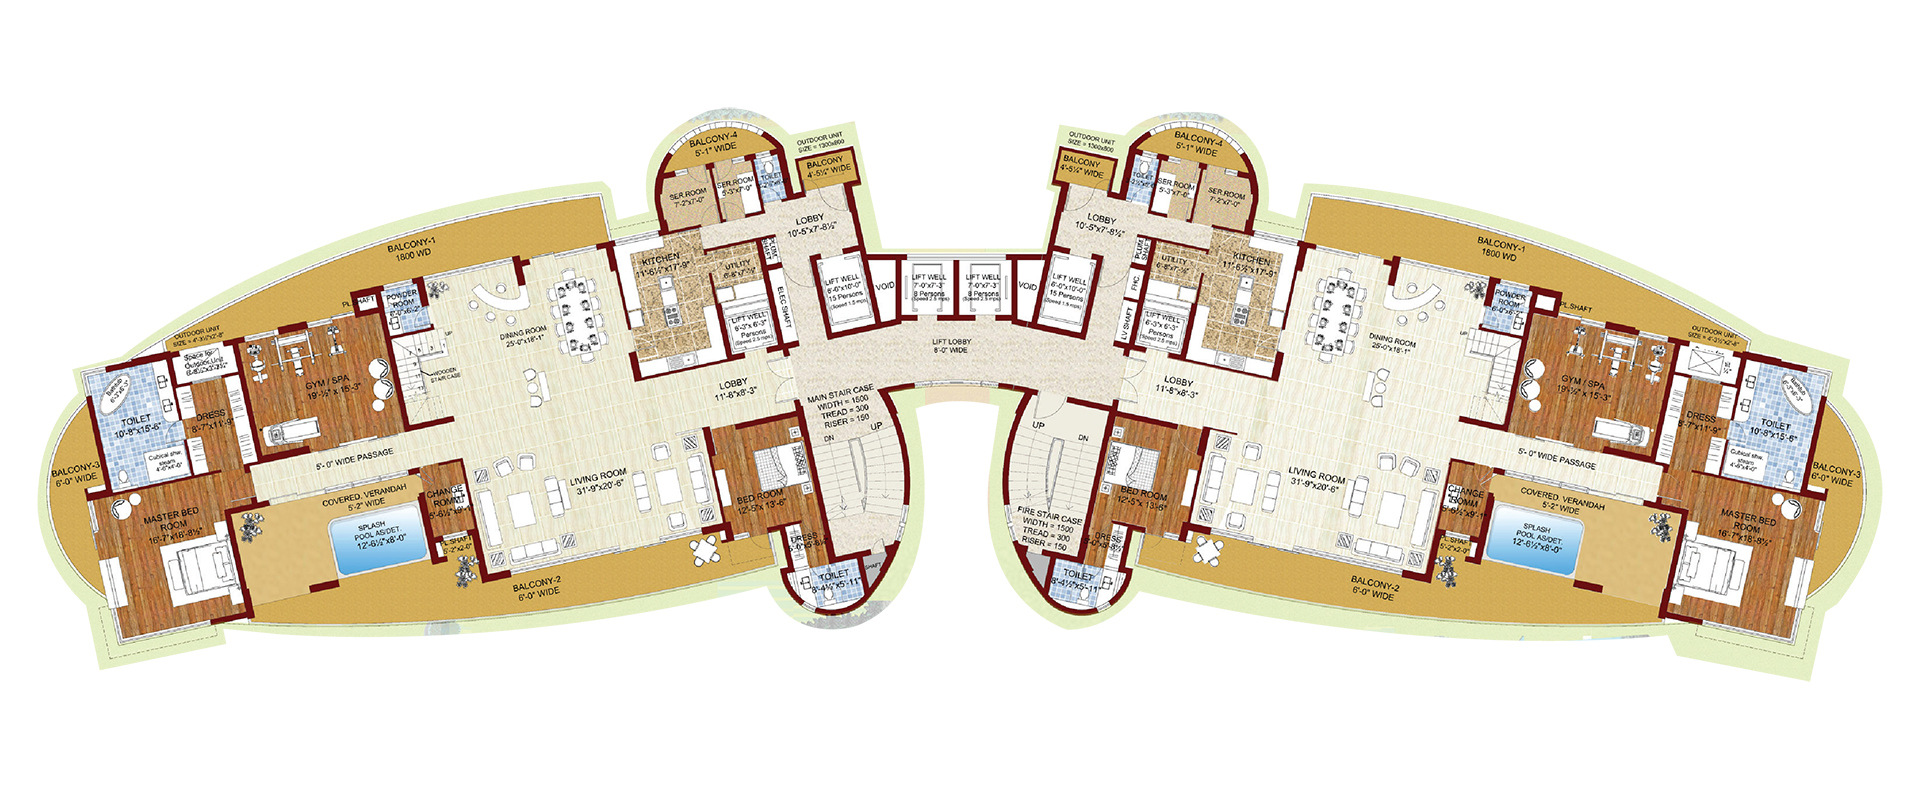 krrish provence estate lower penthouse floor plan